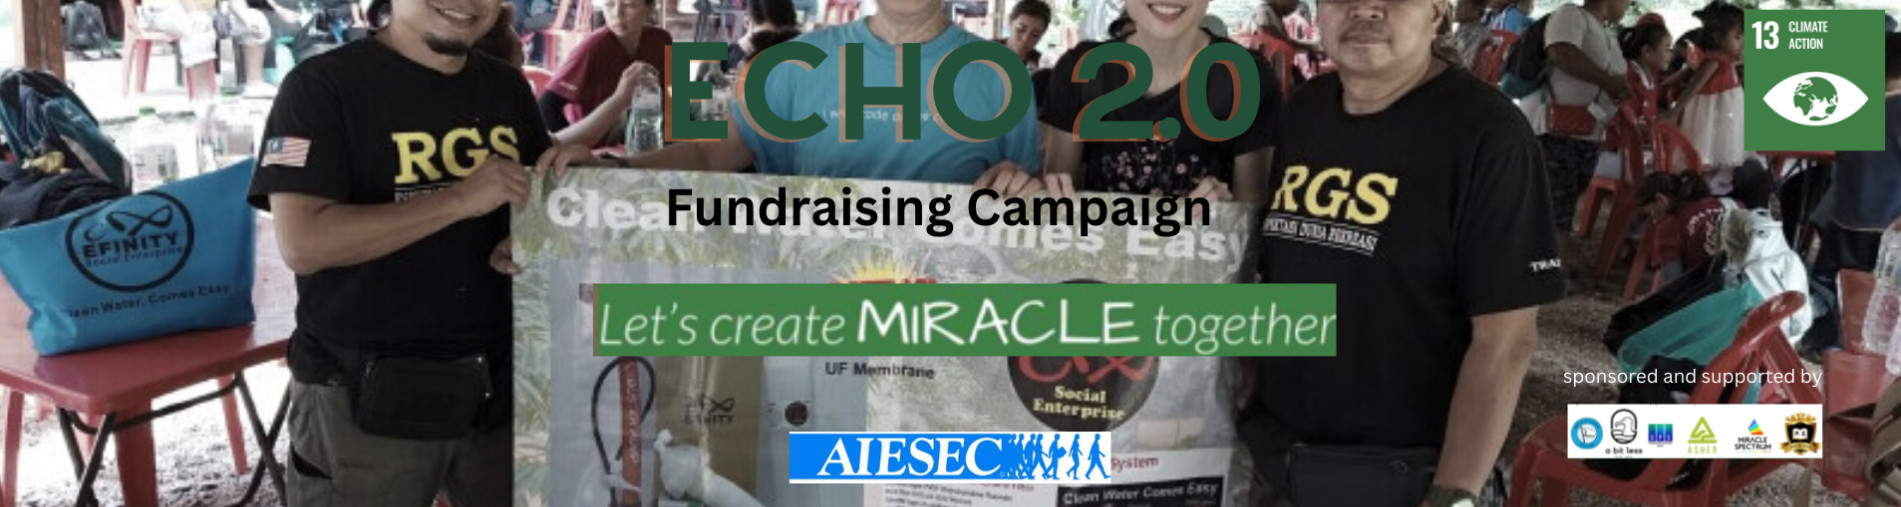 ECHO 2.0 Fundraising Campaign